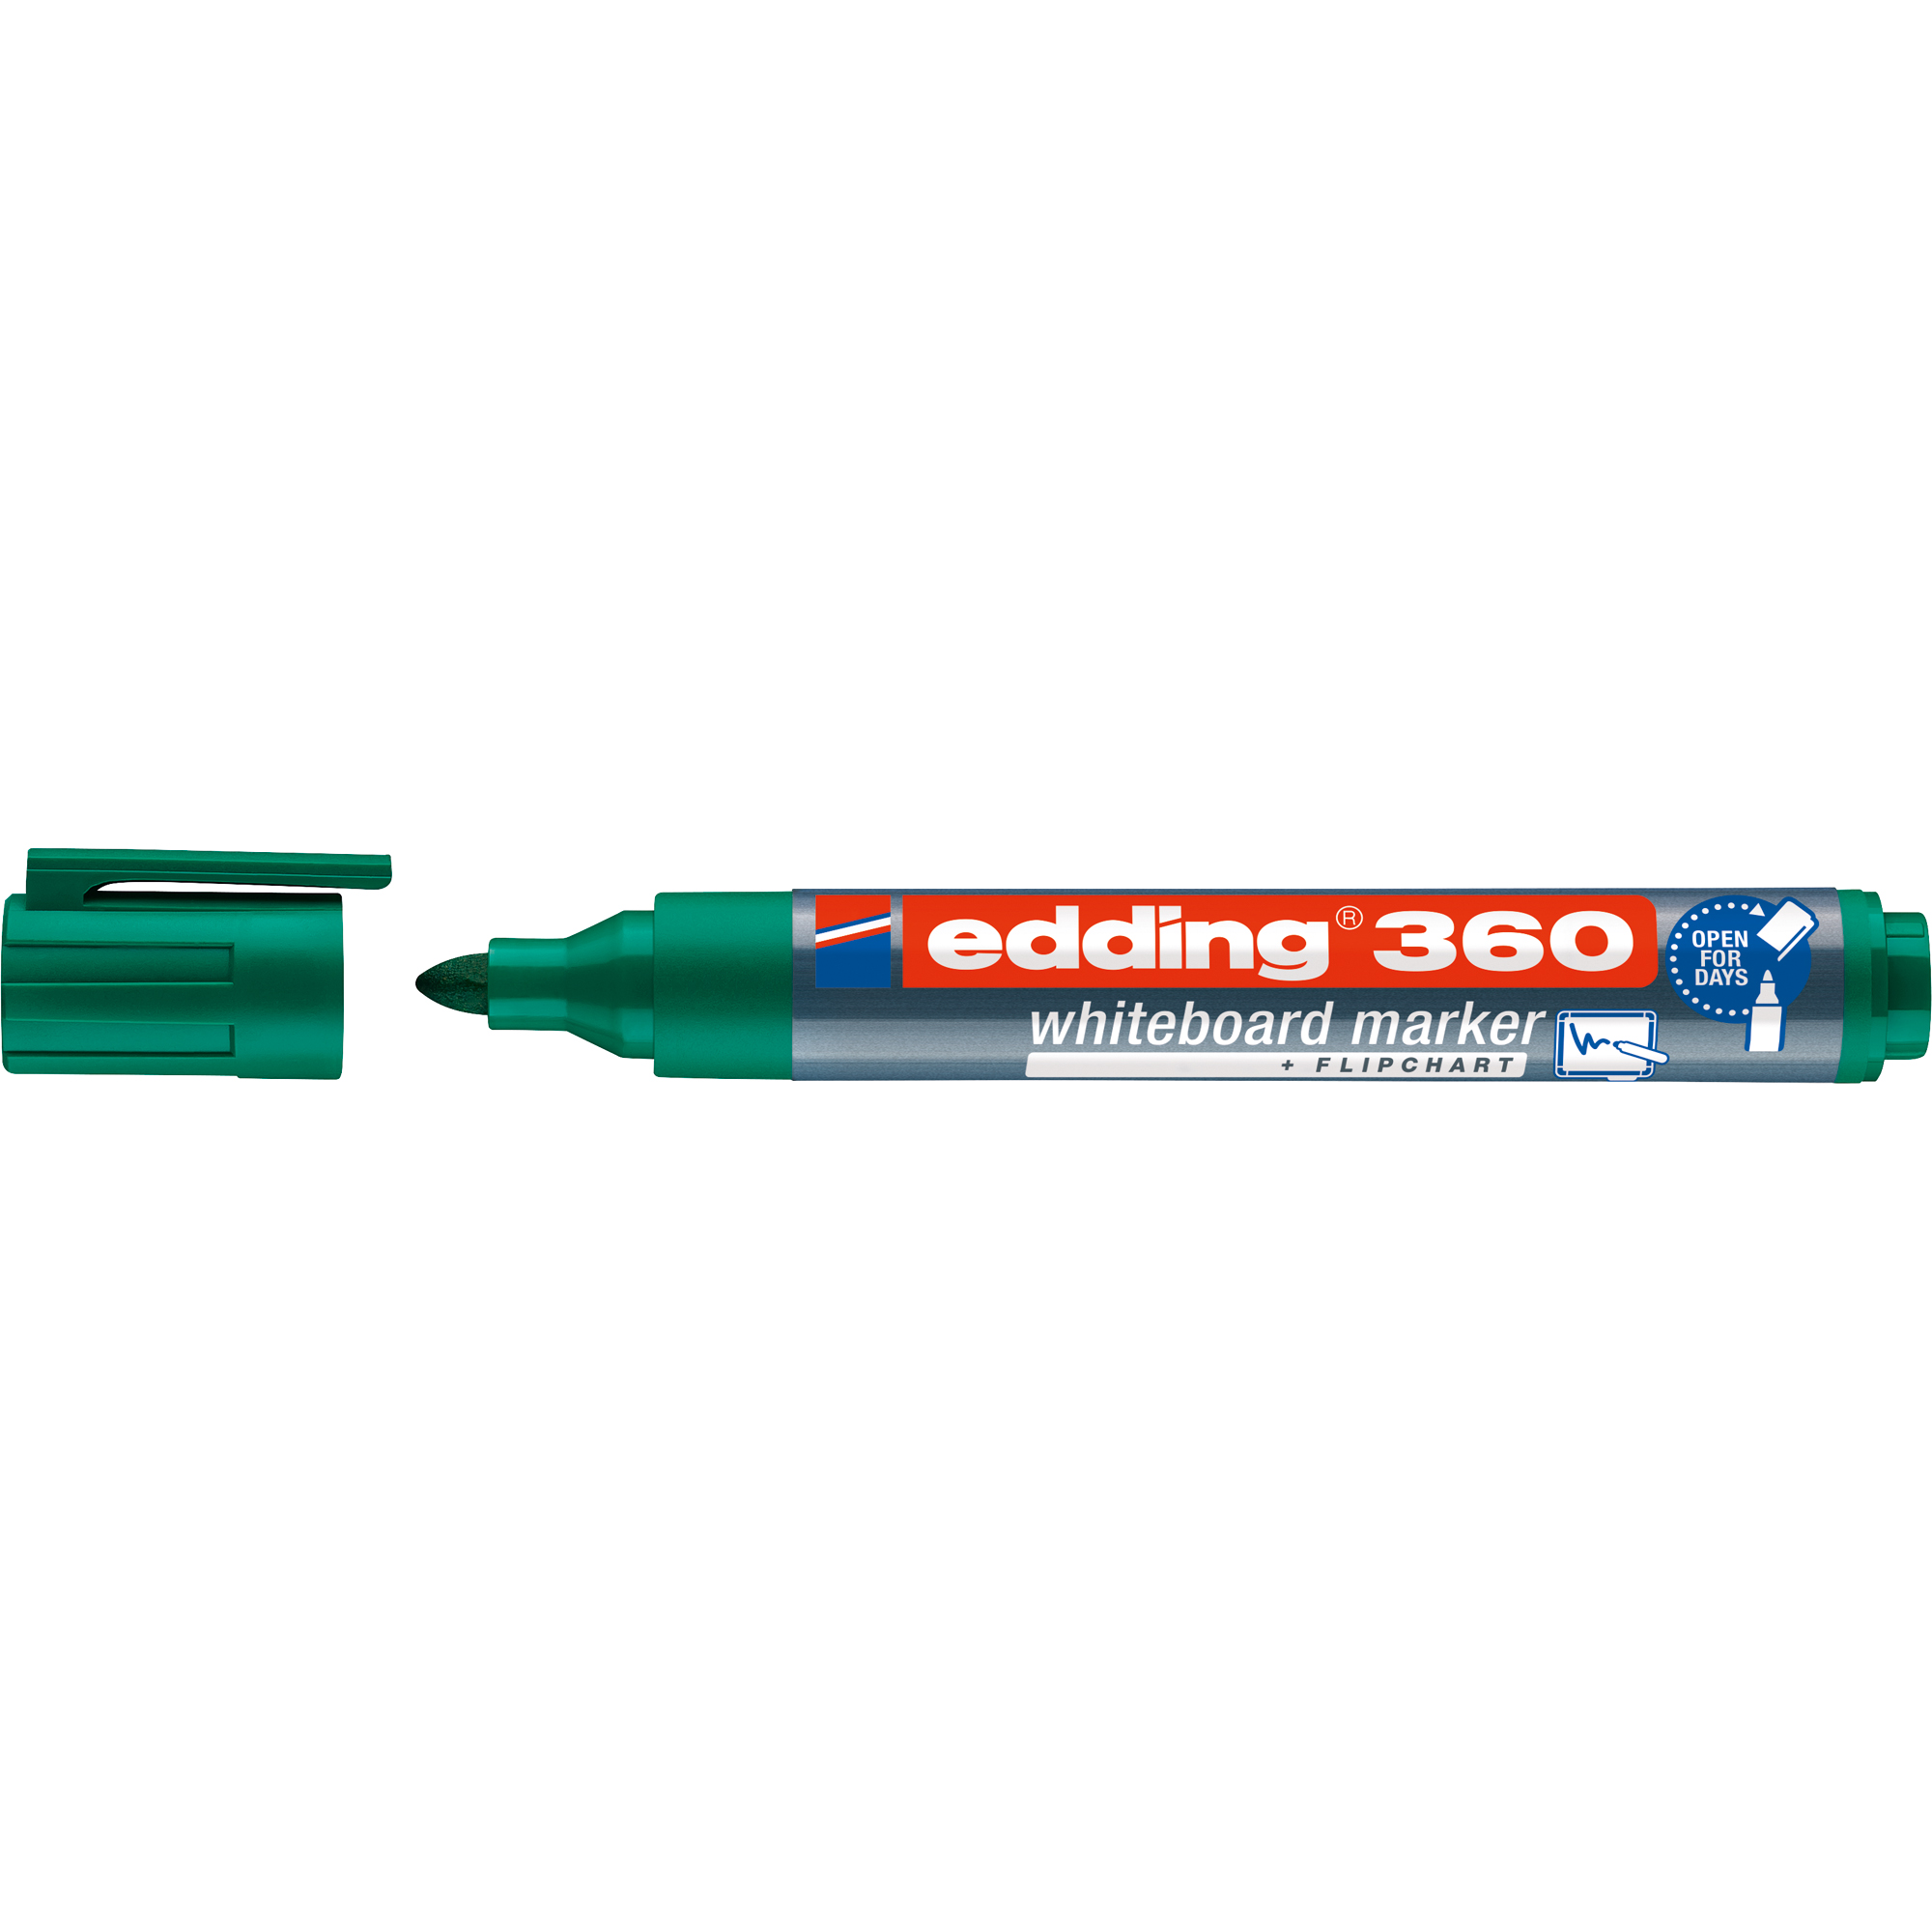 edding Whiteboardmarker 360 grün